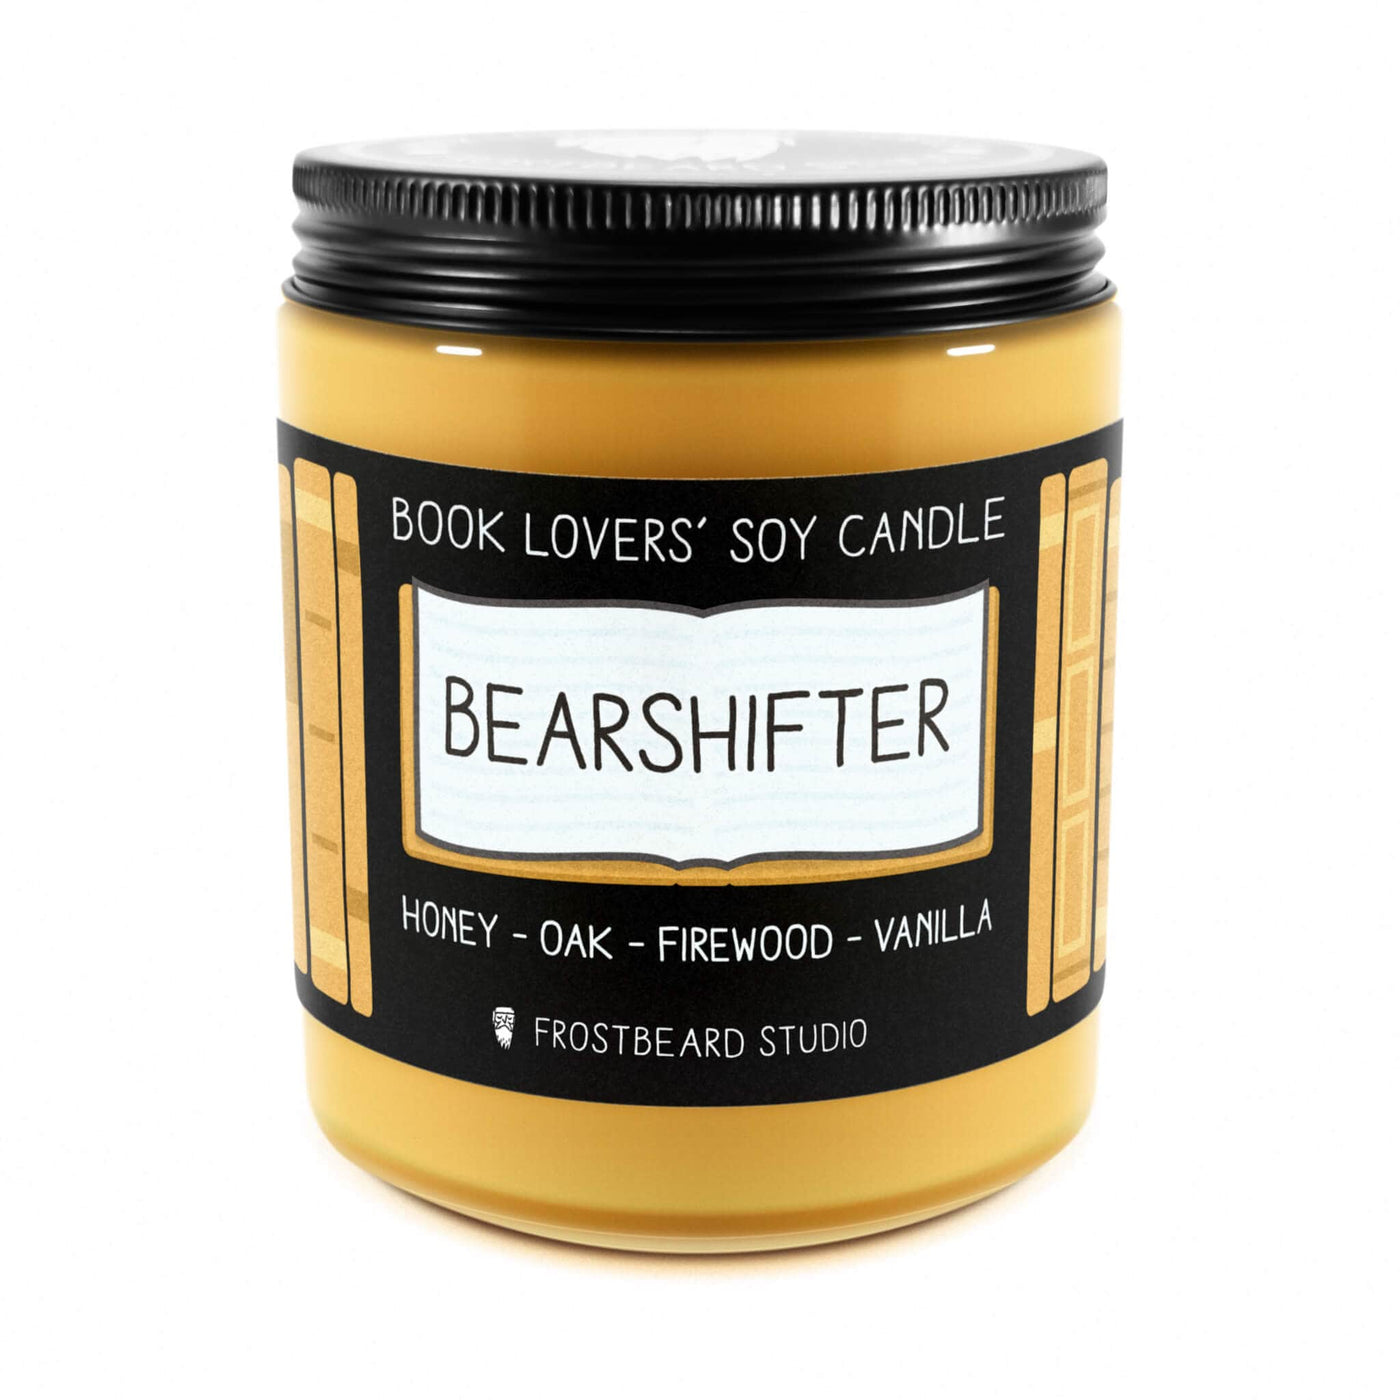 Bearshifter  -  8 oz Jar  -  Book Lovers' Soy Candle  -  Frostbeard Studio